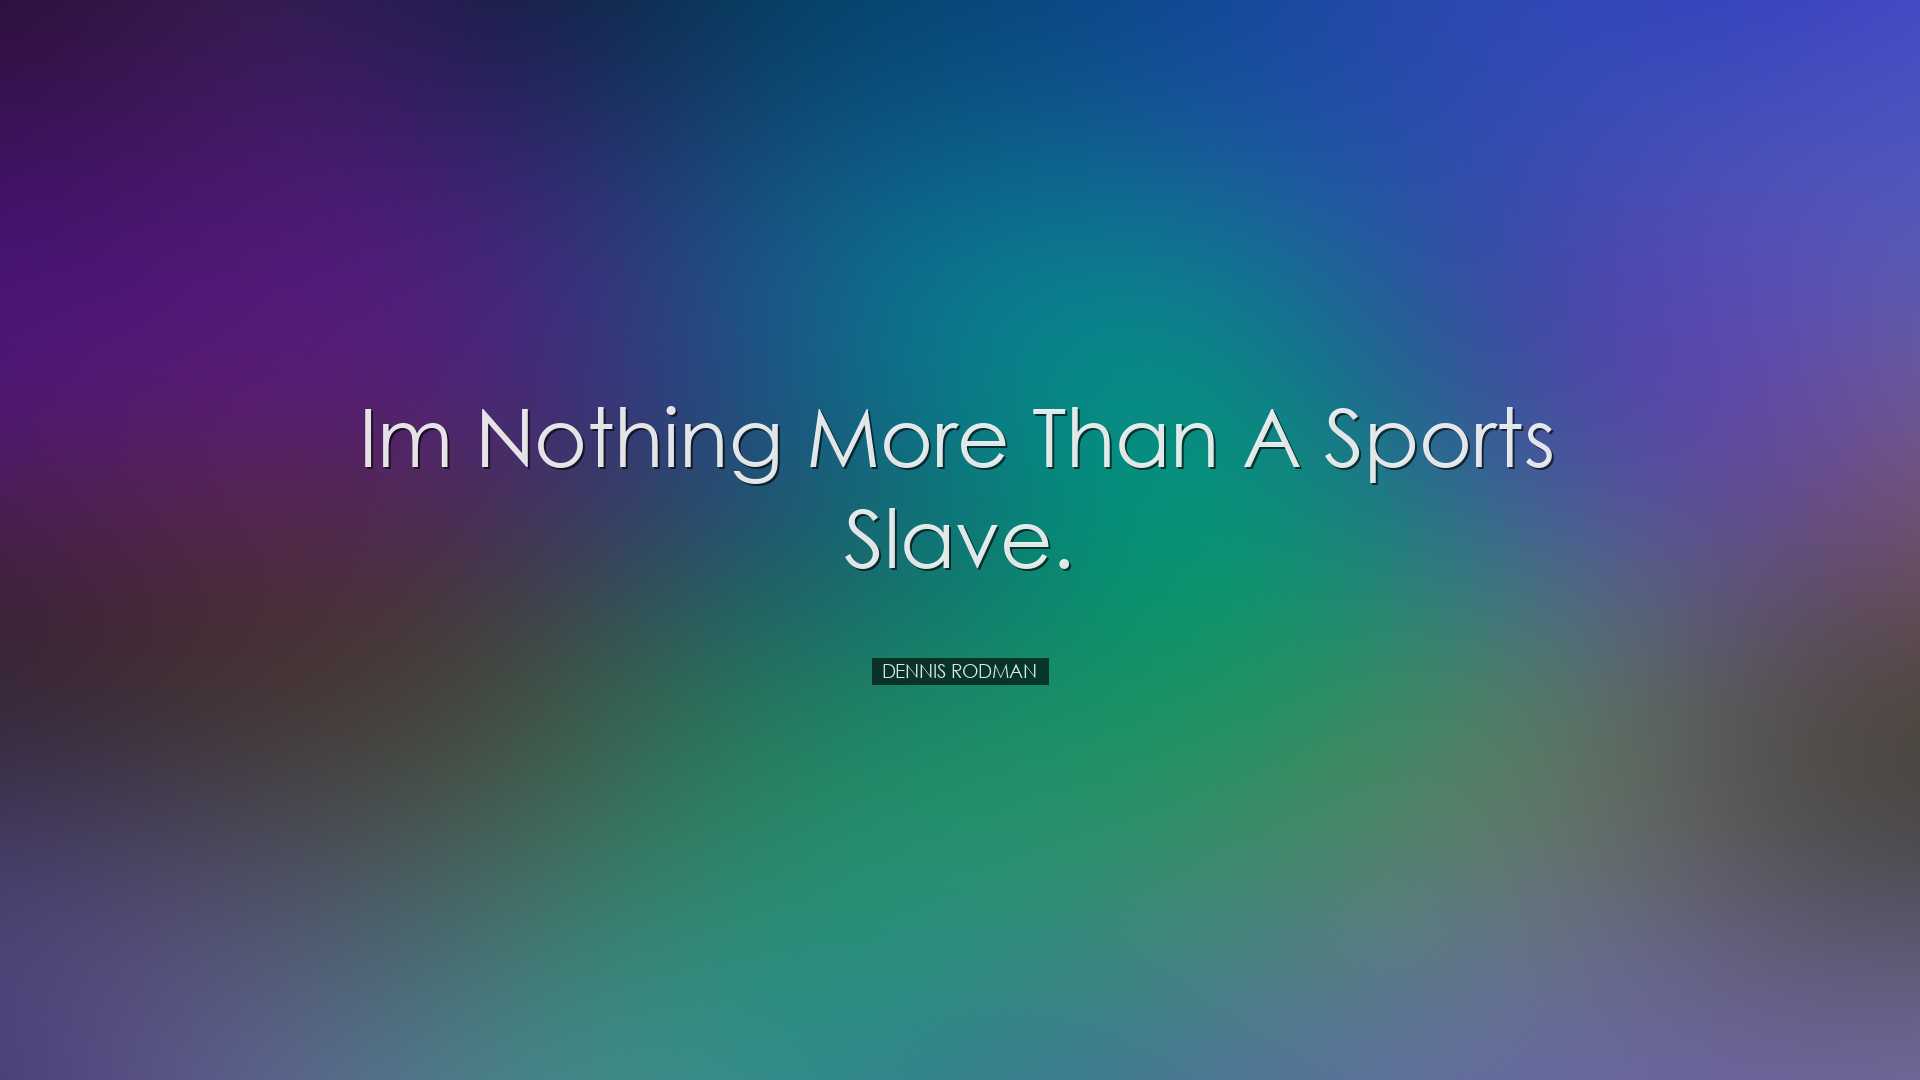 Im nothing more than a sports slave. - Dennis Rodman